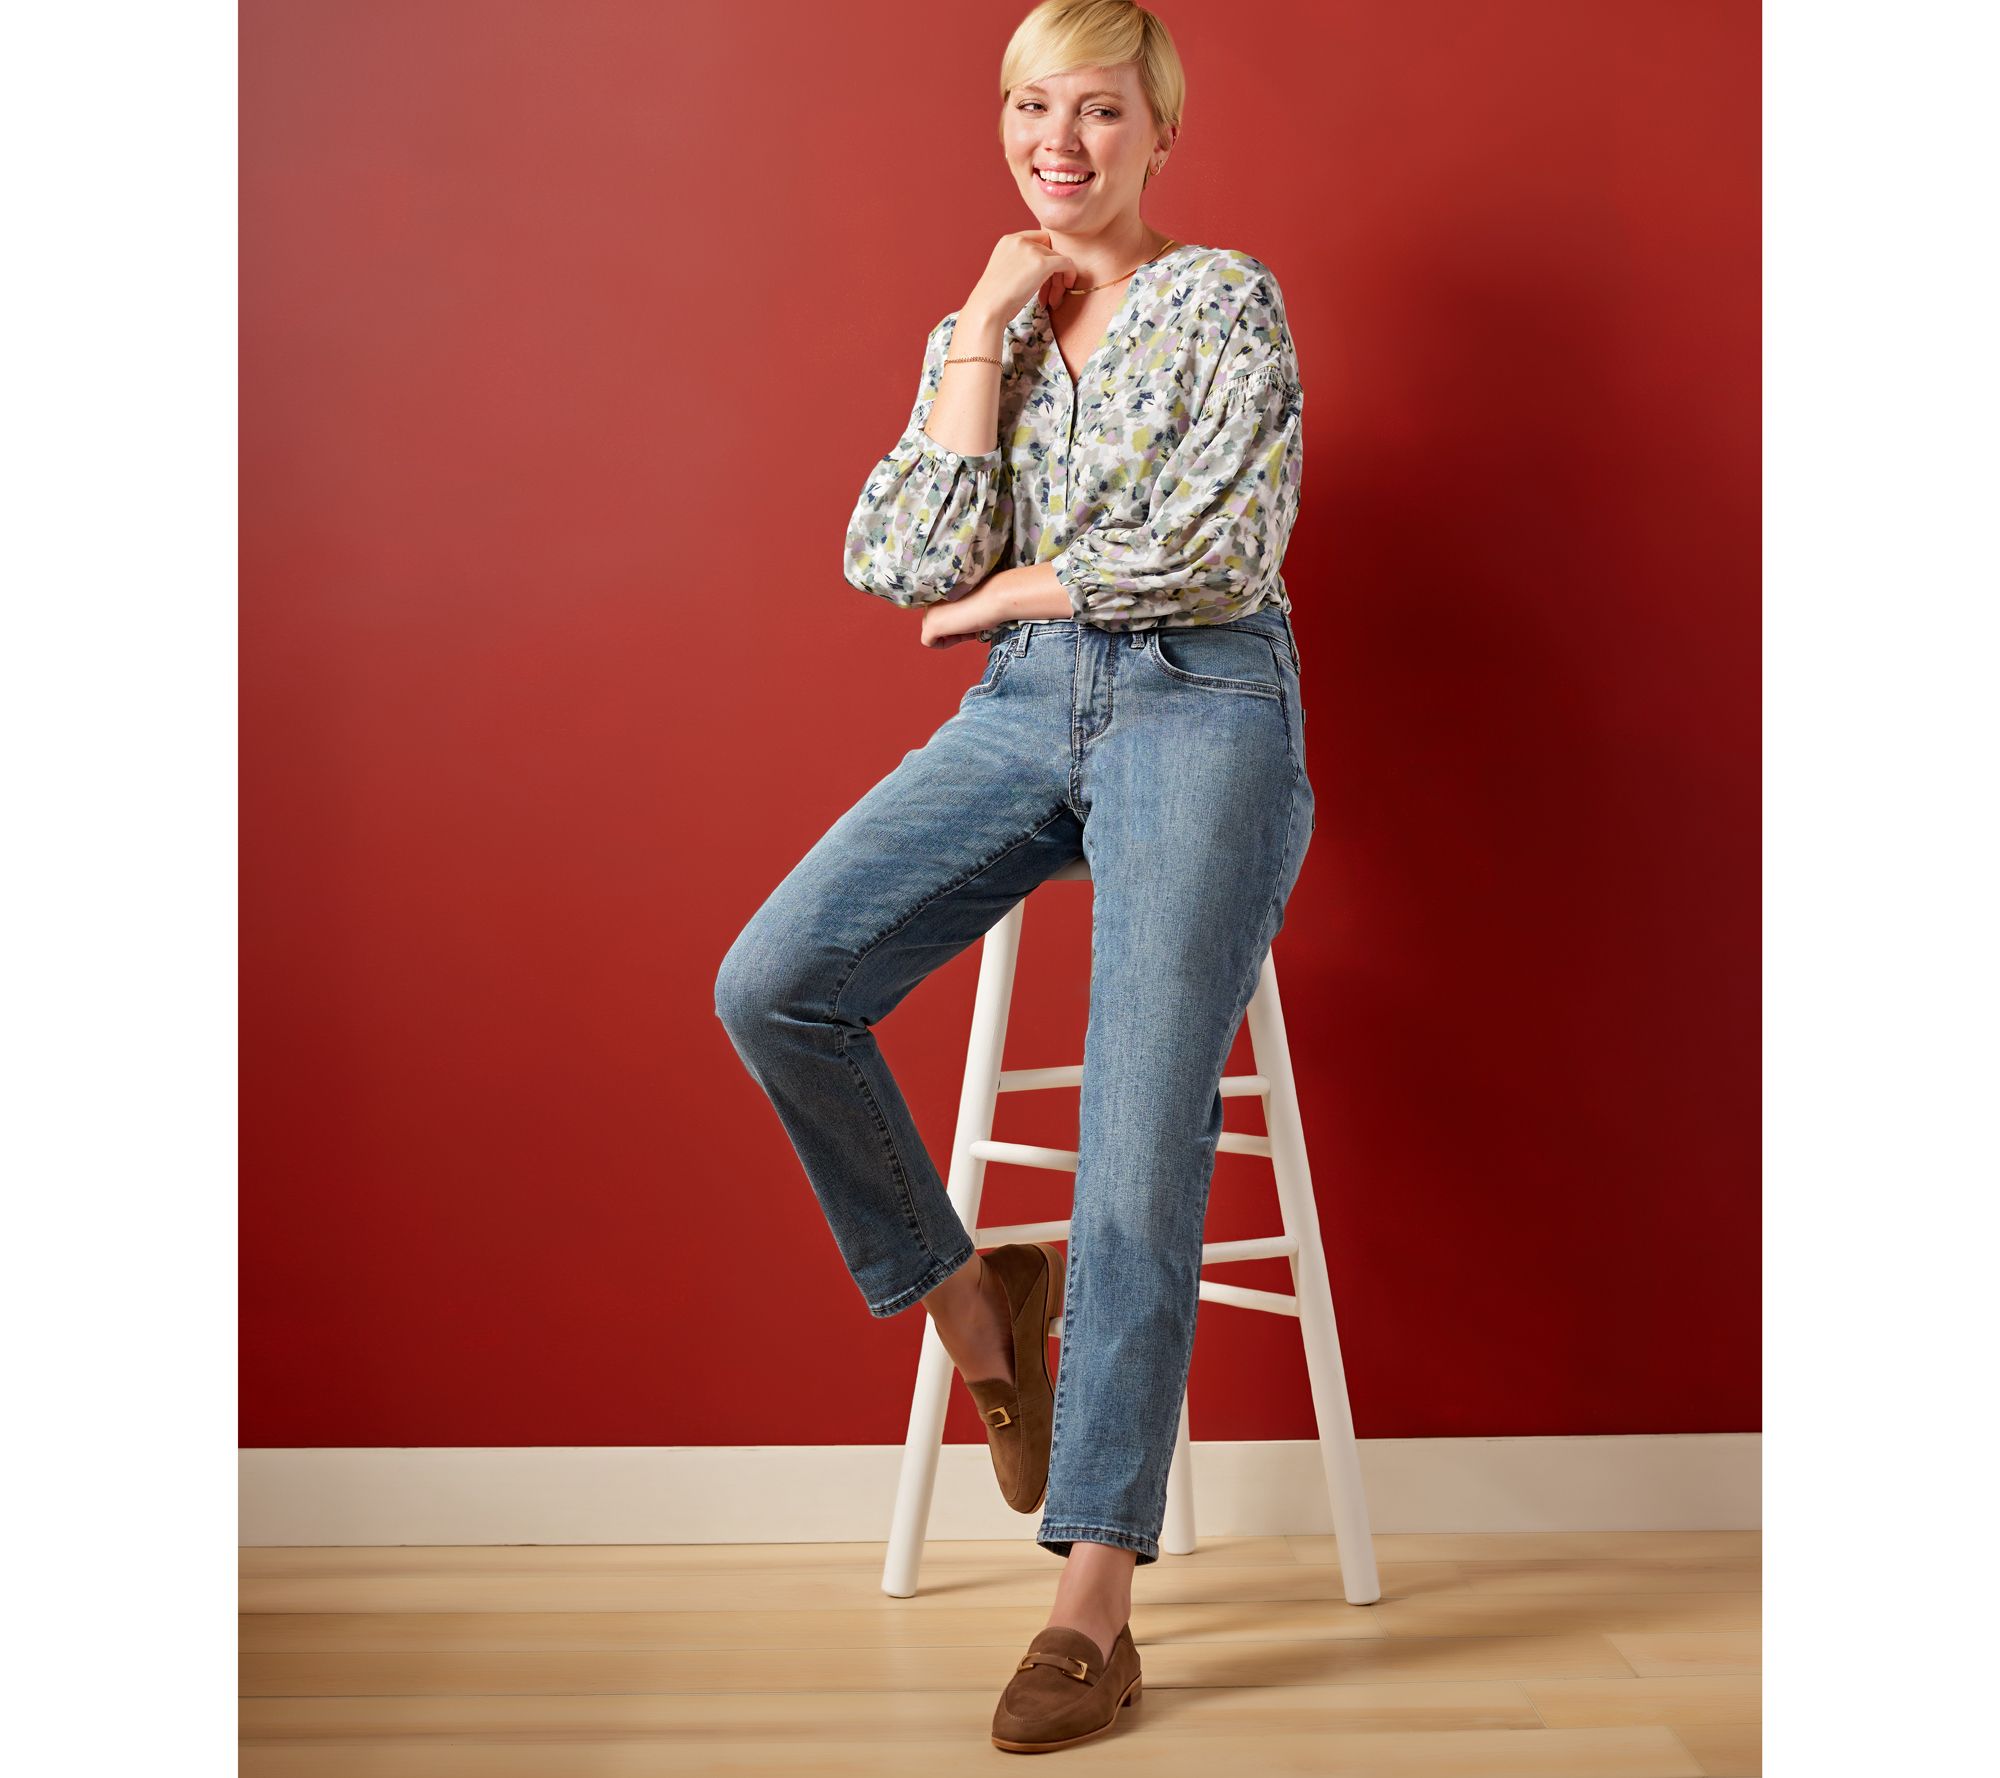 Margot Girlfriend Jeans In Cool Embrace® Denim With Roll Cuffs